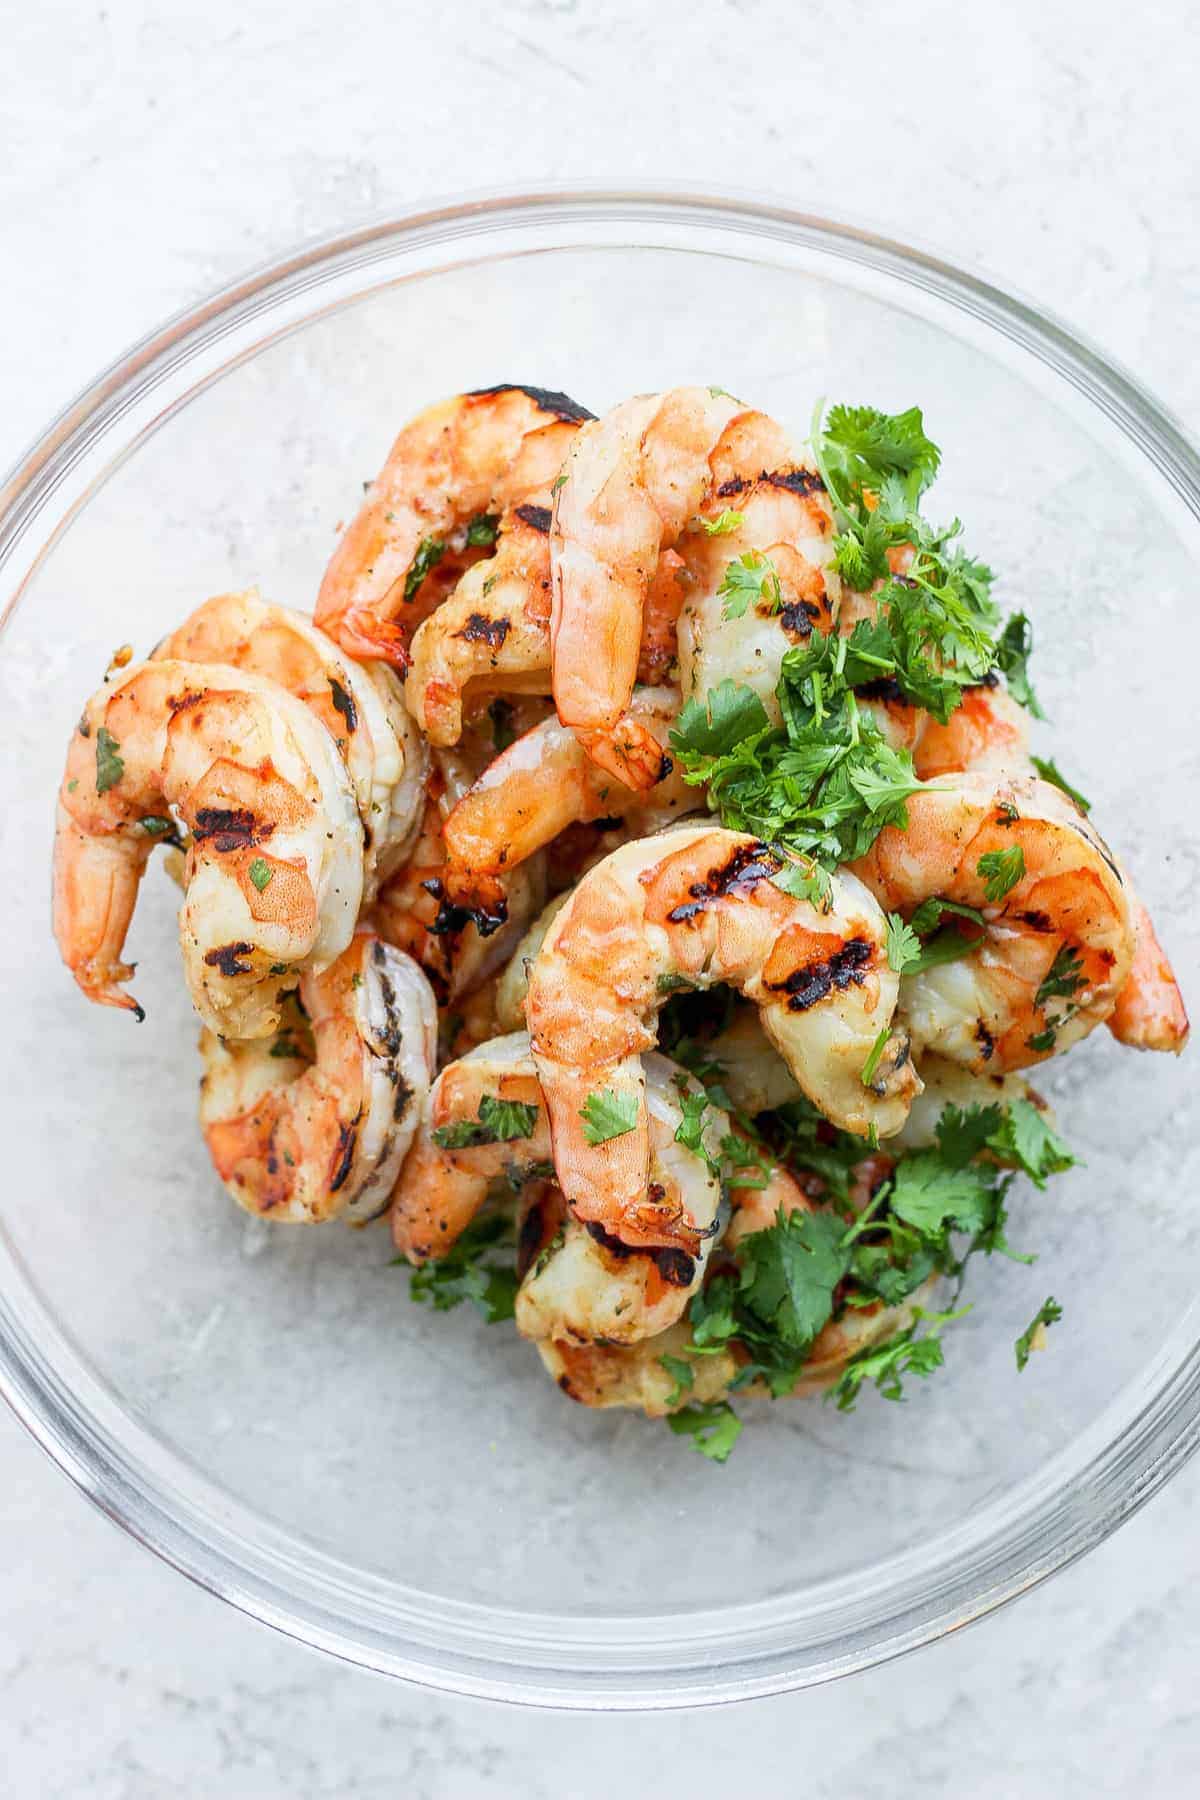 https://fitfoodiefinds.com/wp-content/uploads/2021/07/grilled-shrimp-8-scaled.jpg